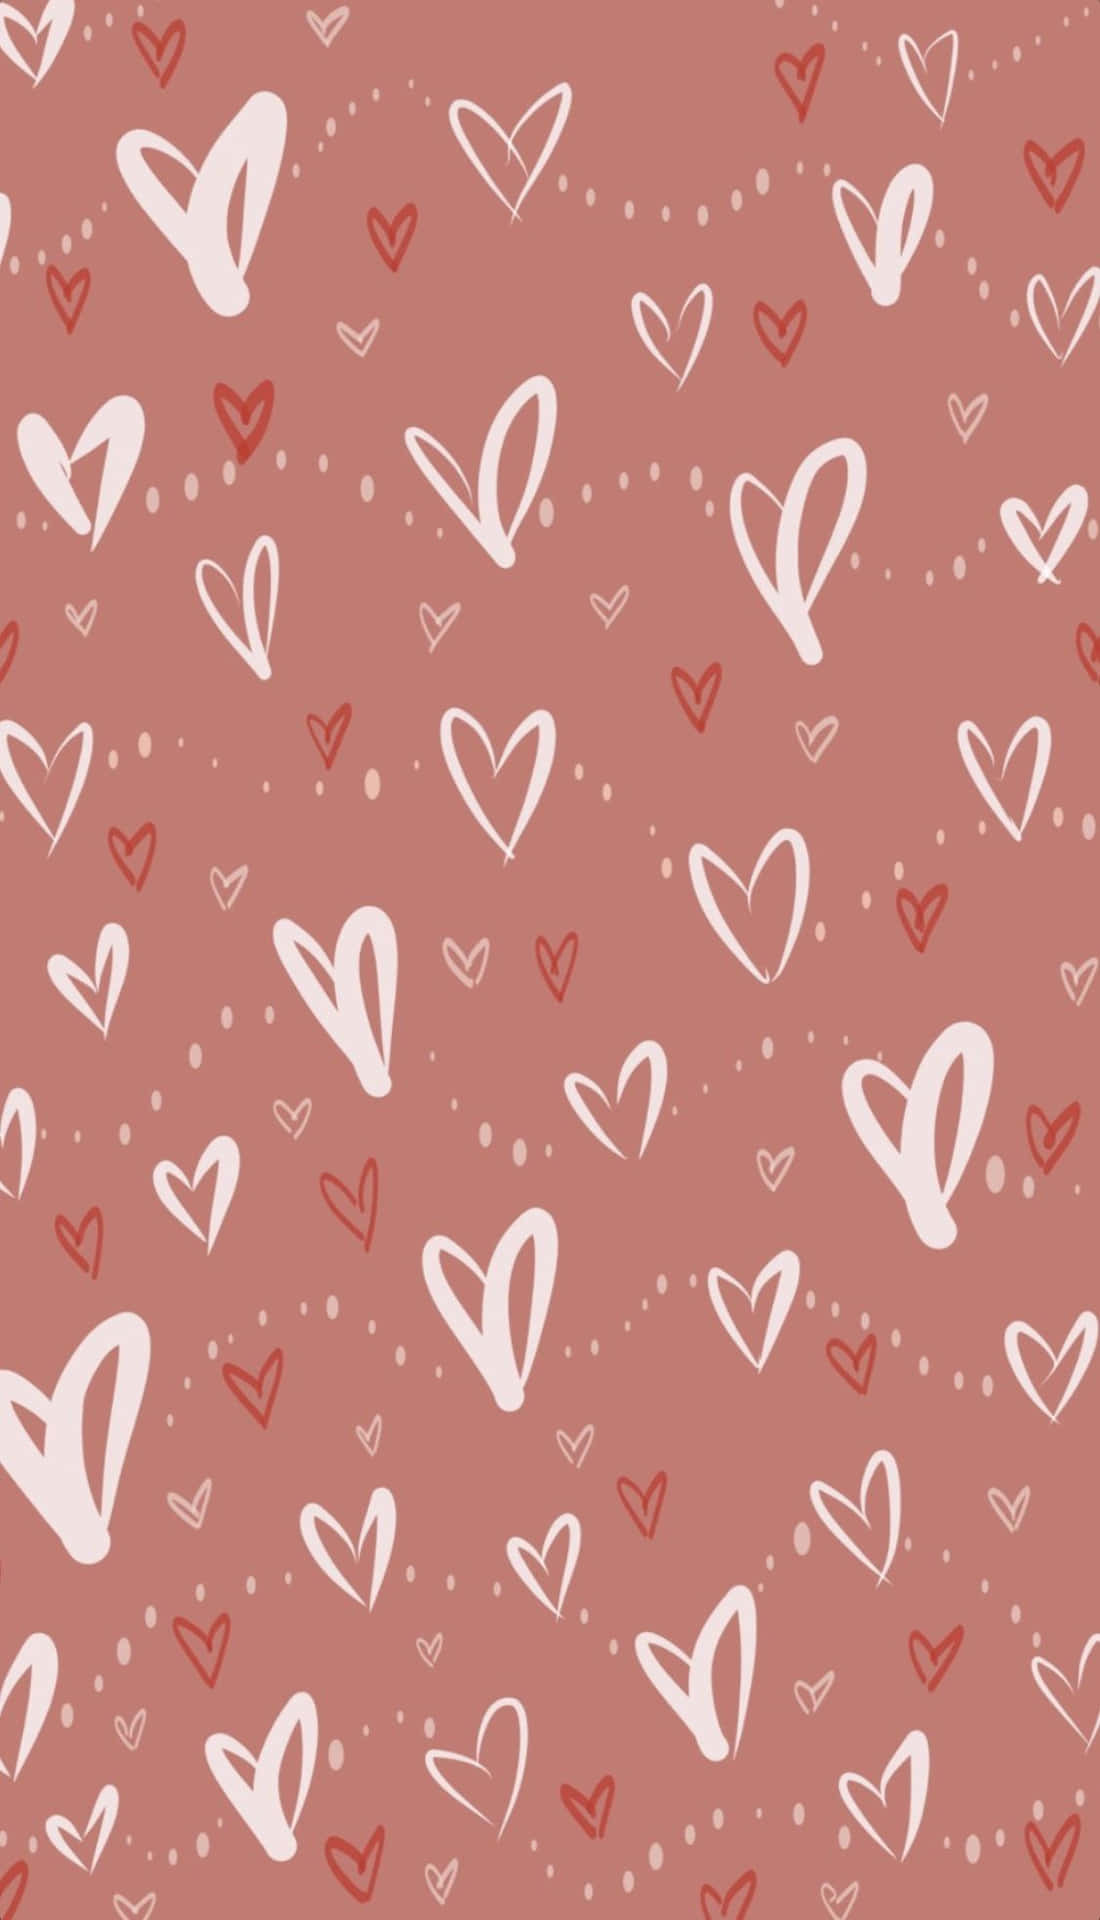 Digital Artwork Heart Symbol Aesthetic Valentine's Day Wallpaper